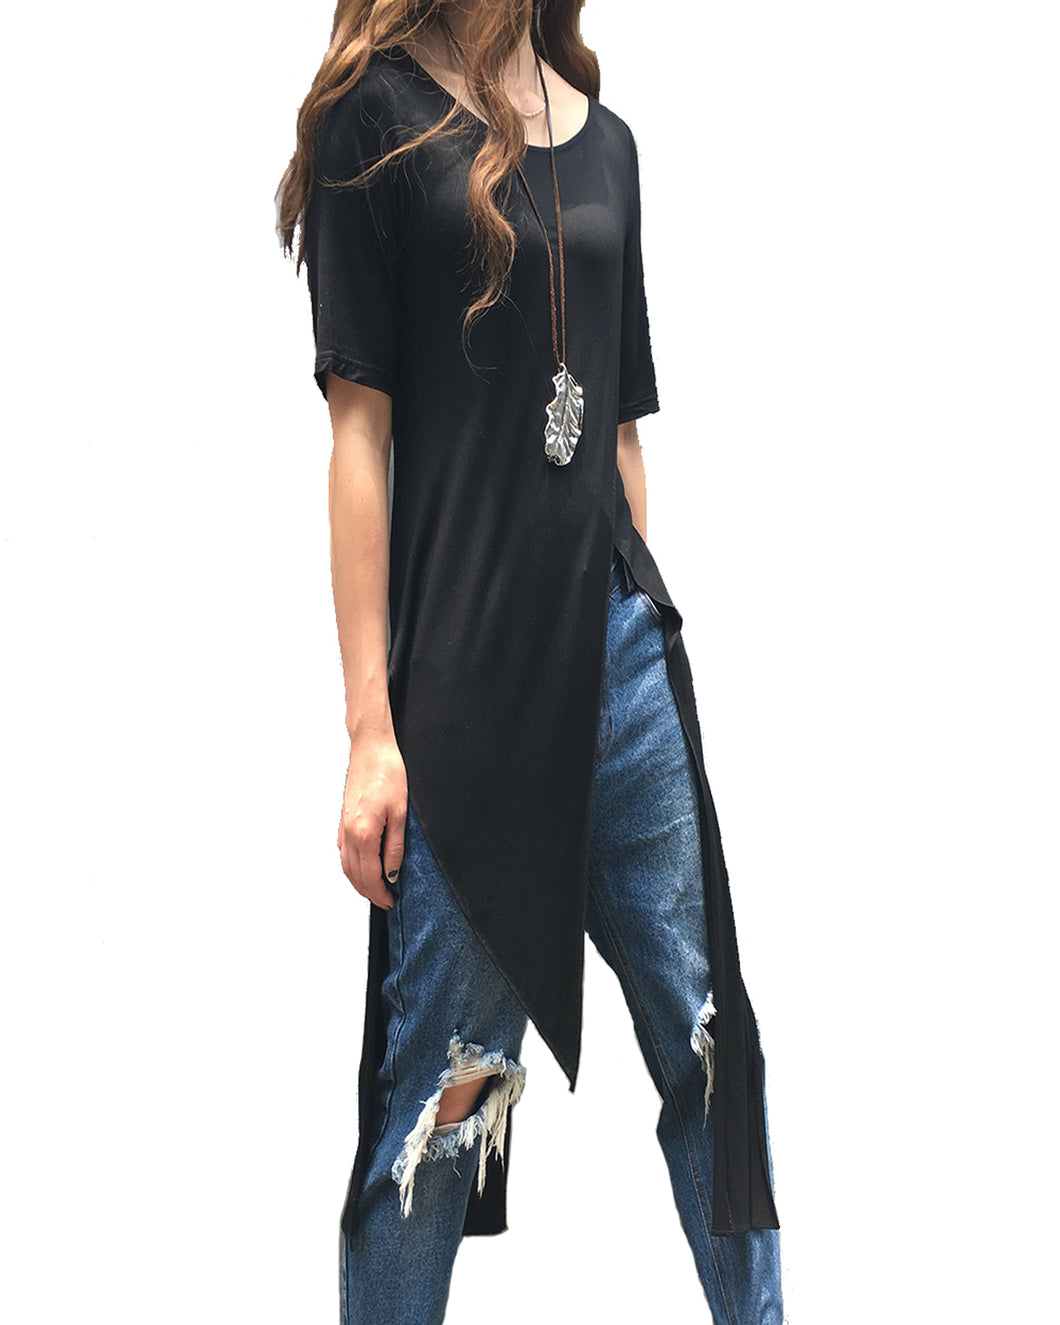 Women's tunic dress/modal cotton tunic dress/short sleeve dress/asymmetrical top/customized black dress(Y1943) - lijingshop